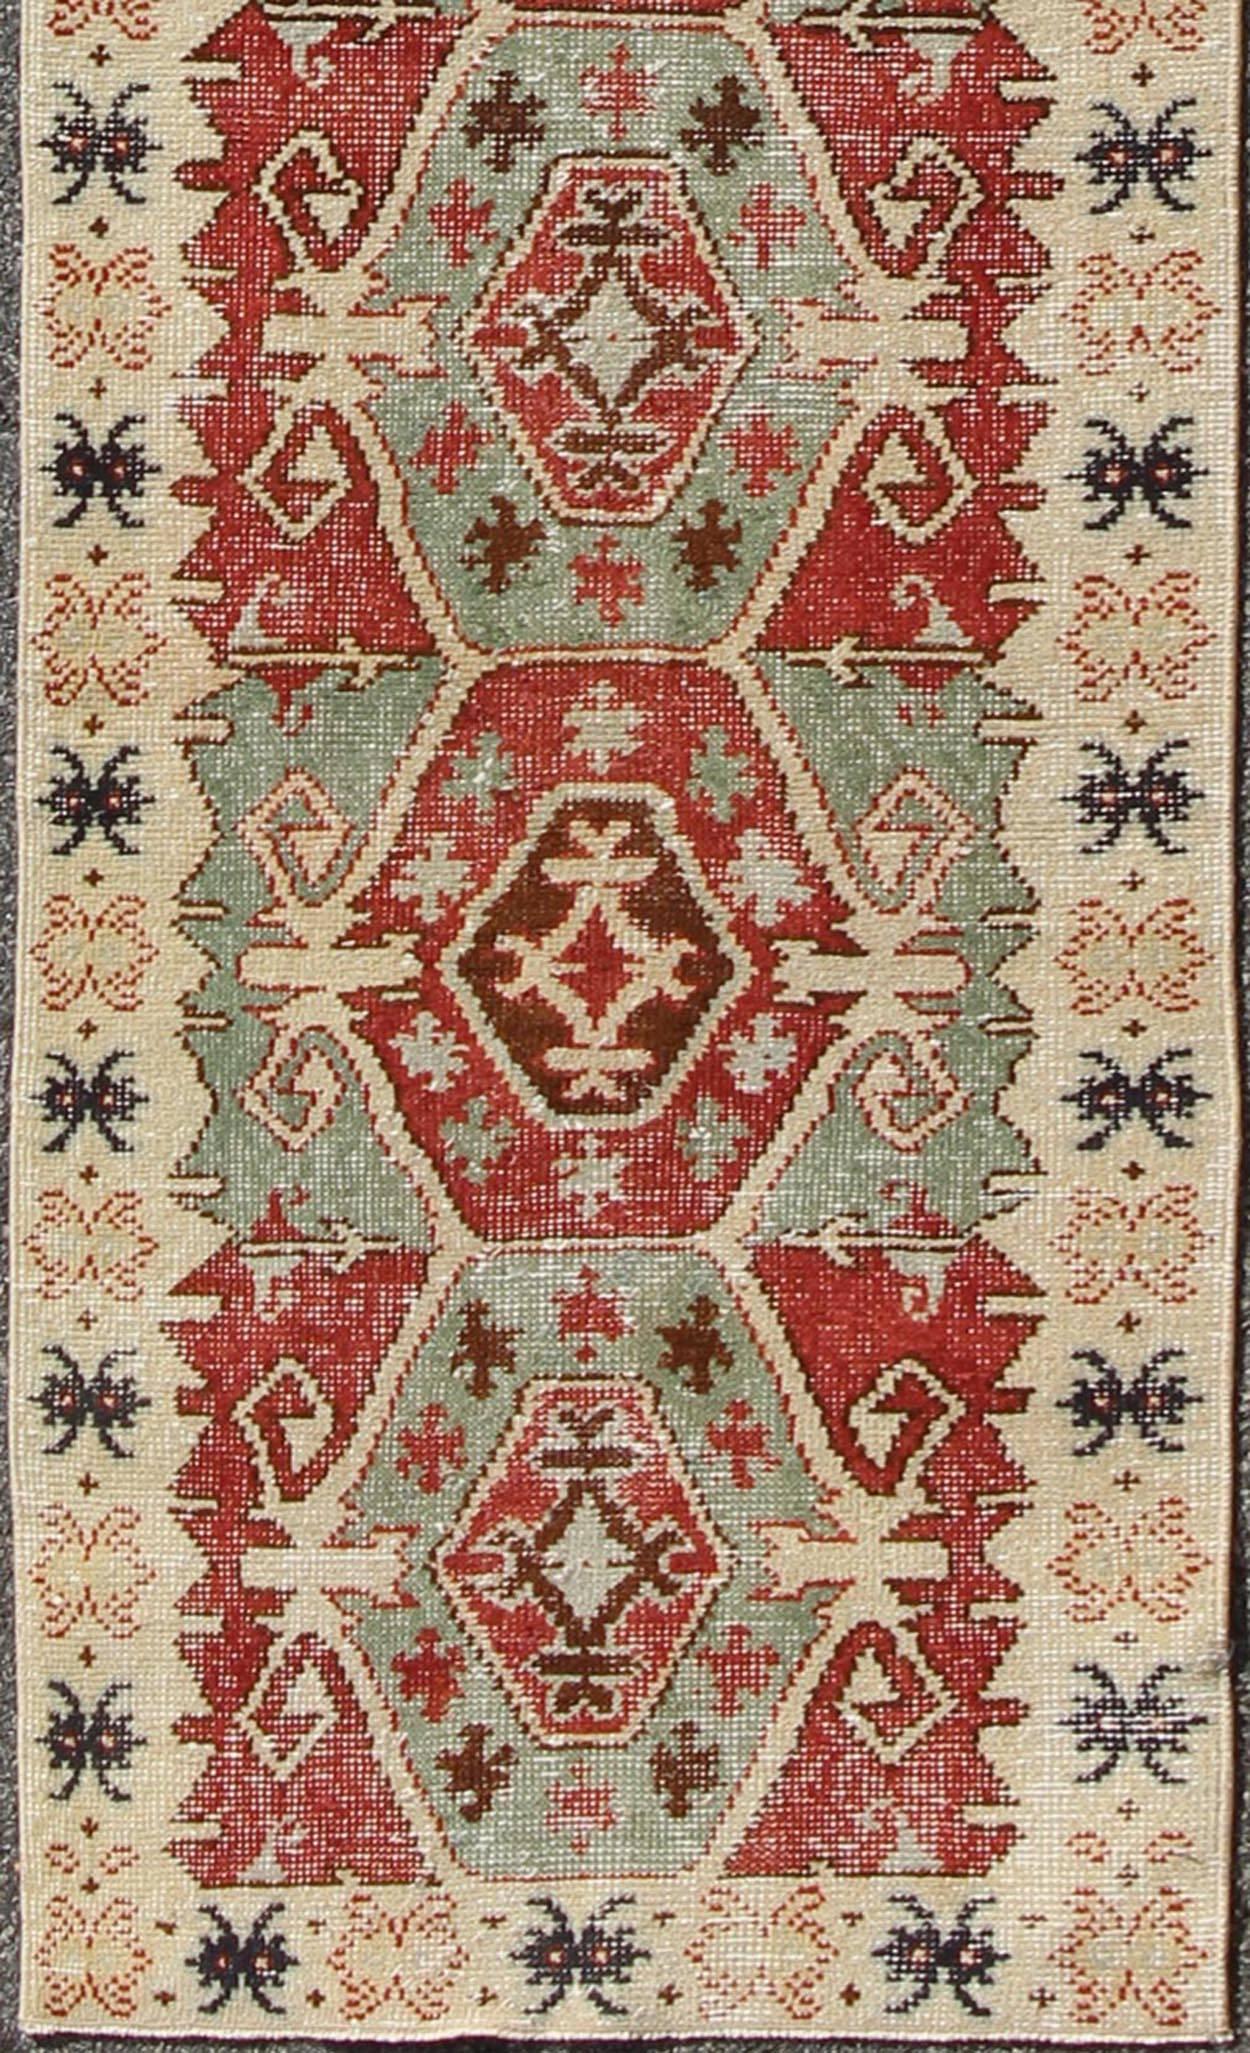 Vintage Turkish Oushak Runner rug with Geometric Tribal Medallions. Keivan Woven Arts, Rug/TU-MTU-3359, 1950's Vintage Turkish Oushak Runner in Teal and Red, rug mtu-3359, country of origin / type: Turkey / Oushak, circa mid-20th